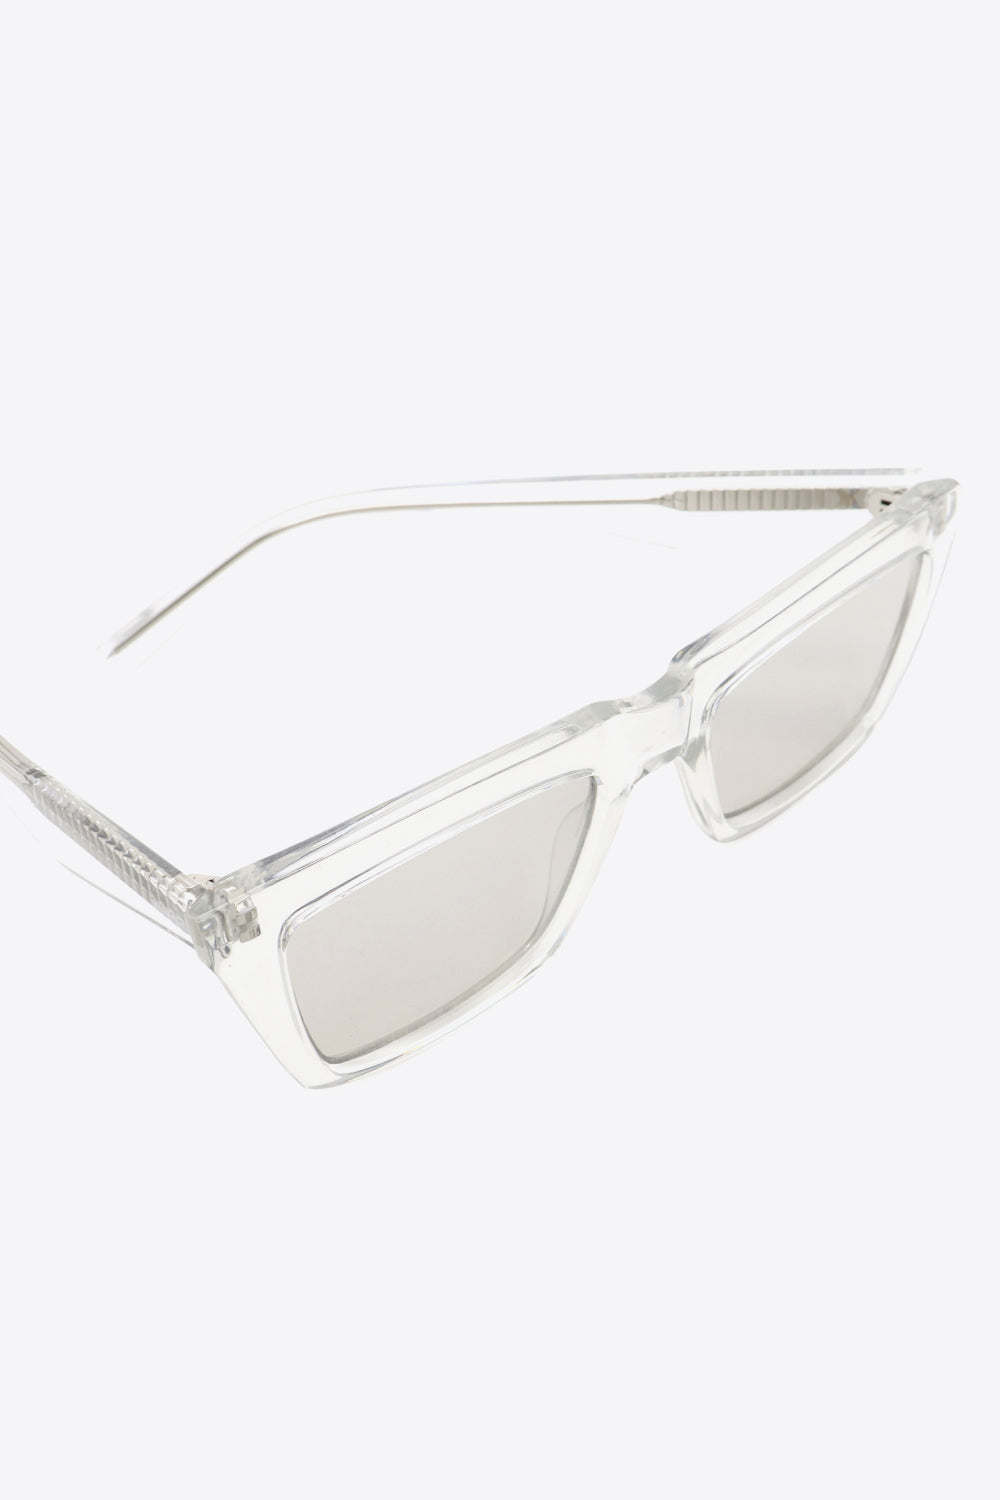 Uylee's Boutique Cellulose Propionate Frame Rectangle Sunglasses